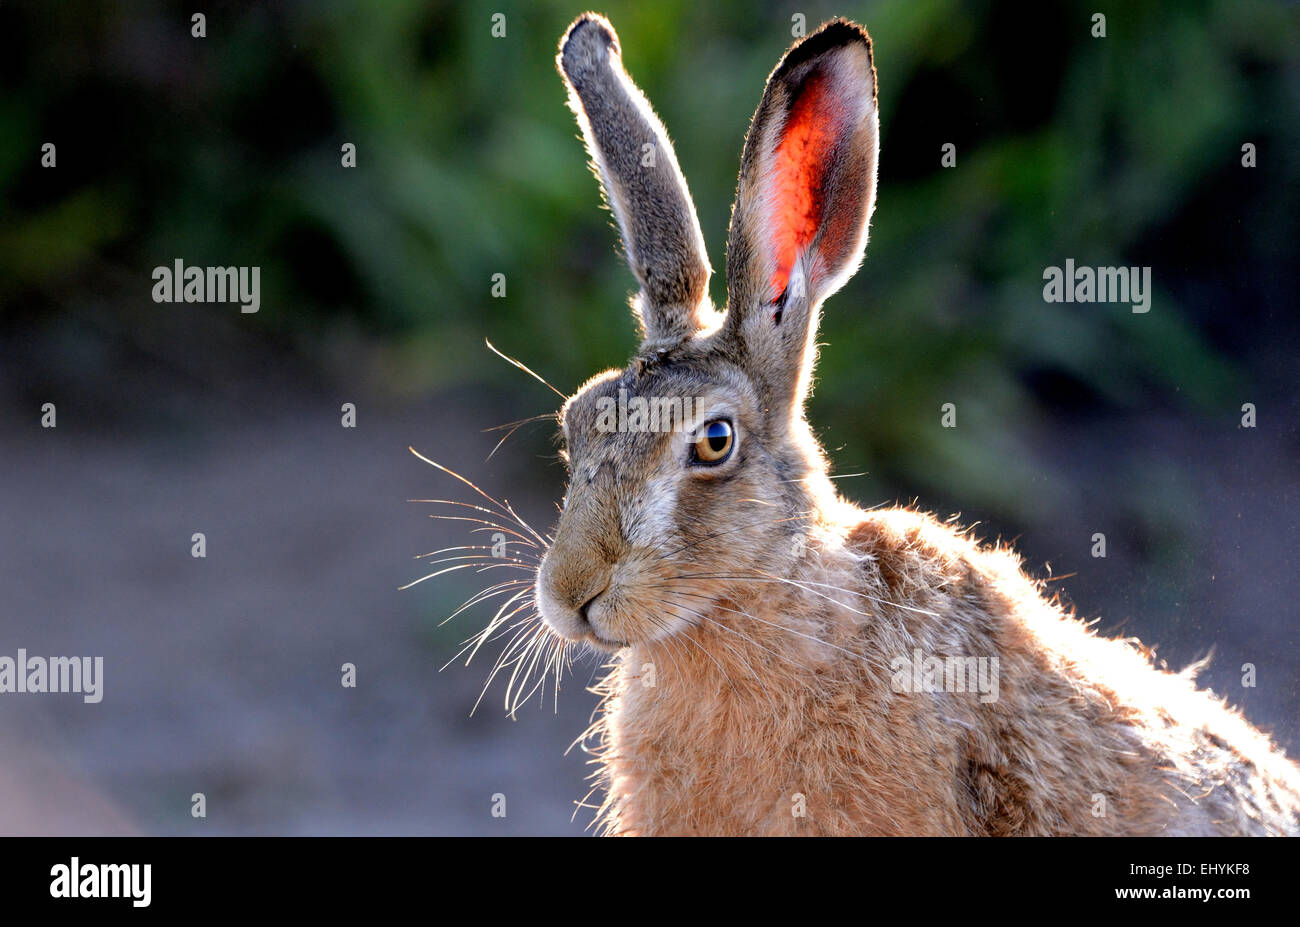 Hare, Rabbit, Lepus europaeus Pallas, brown hare, Eoropean hare, animal, wild animal, game, low game, Germany Stock Photo